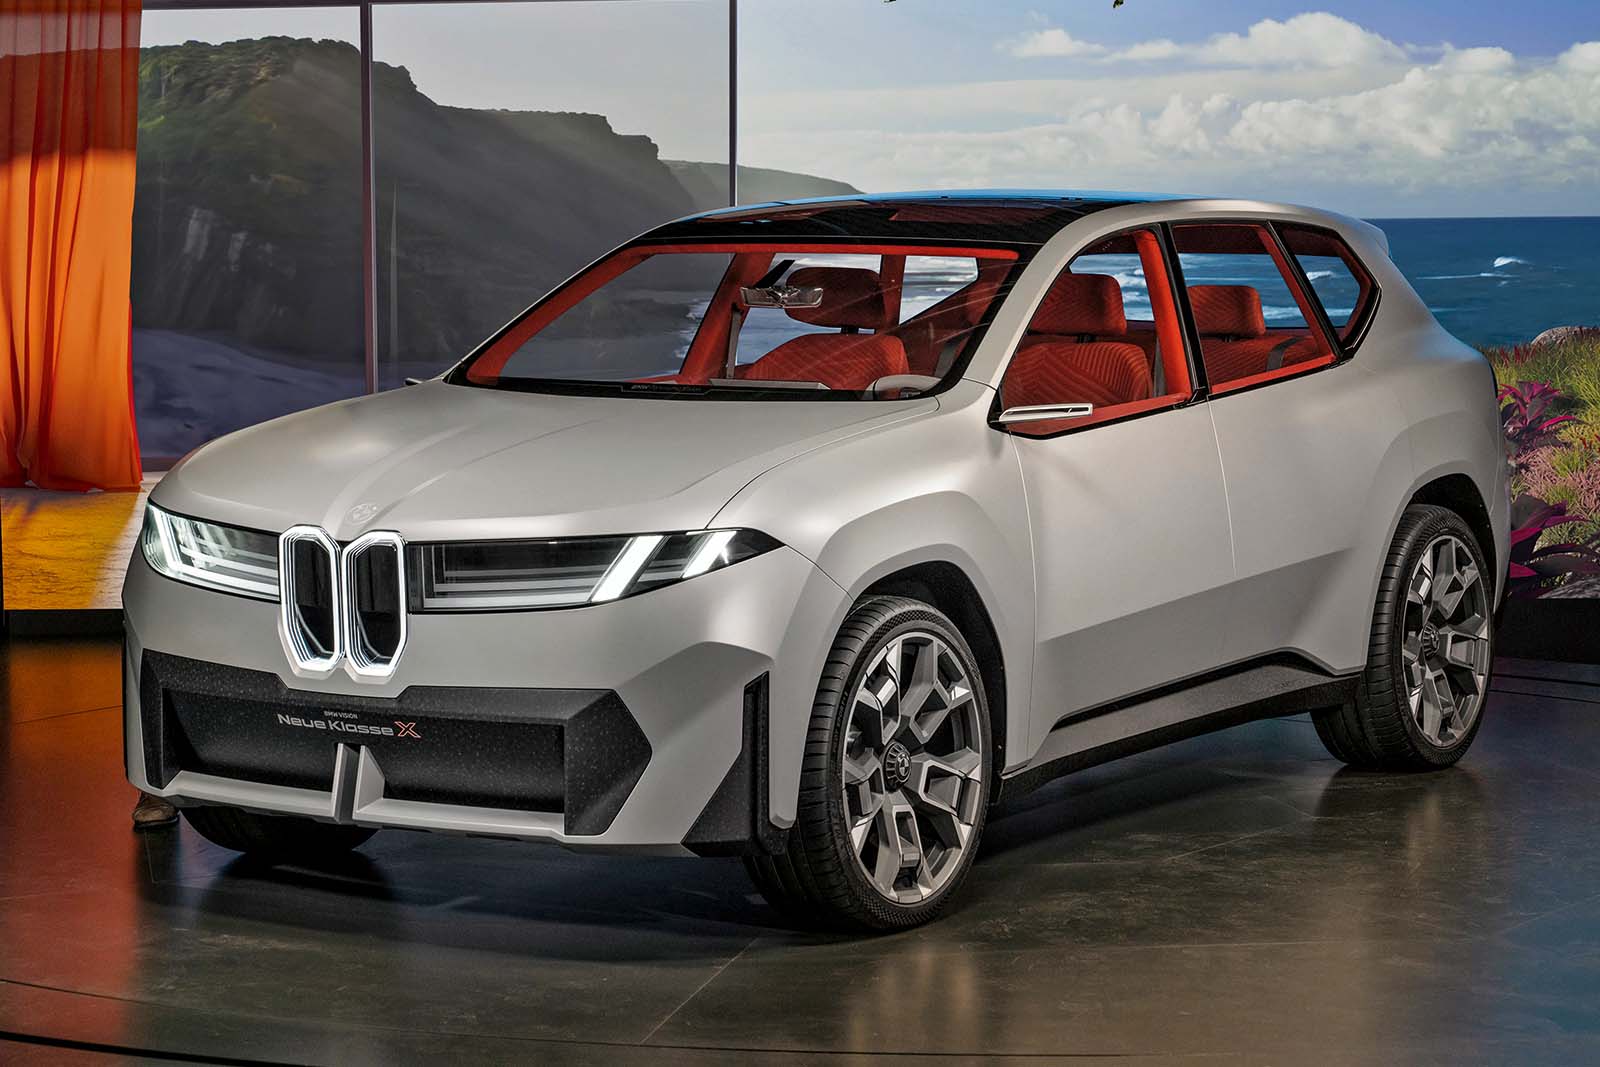 BMW Vision Neue Klasse X sets template for brand&#039;s electric SUVs